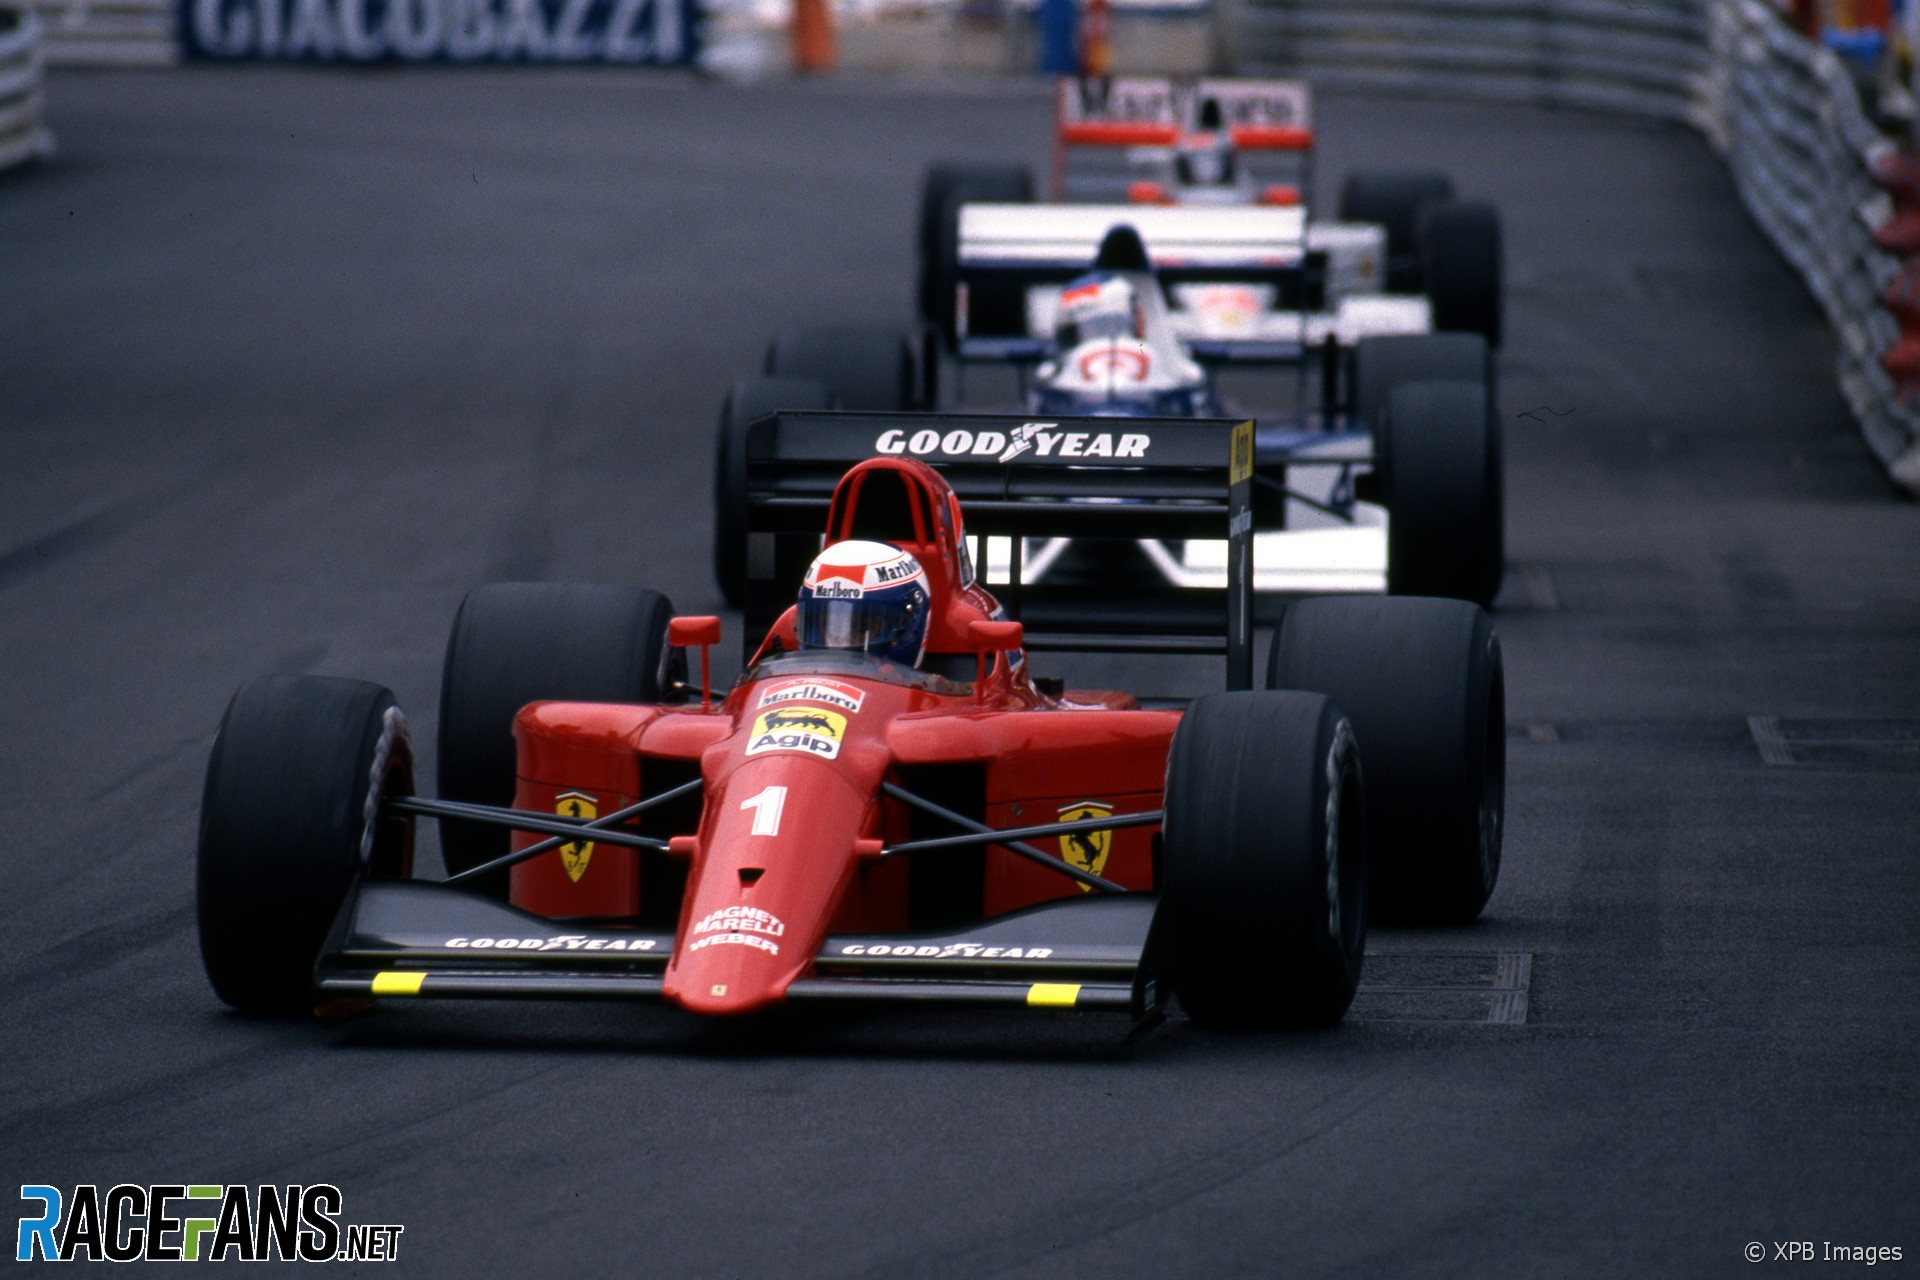 Alain Prost, Jean Alesi, Gerhard Berger, Monaco, 1990